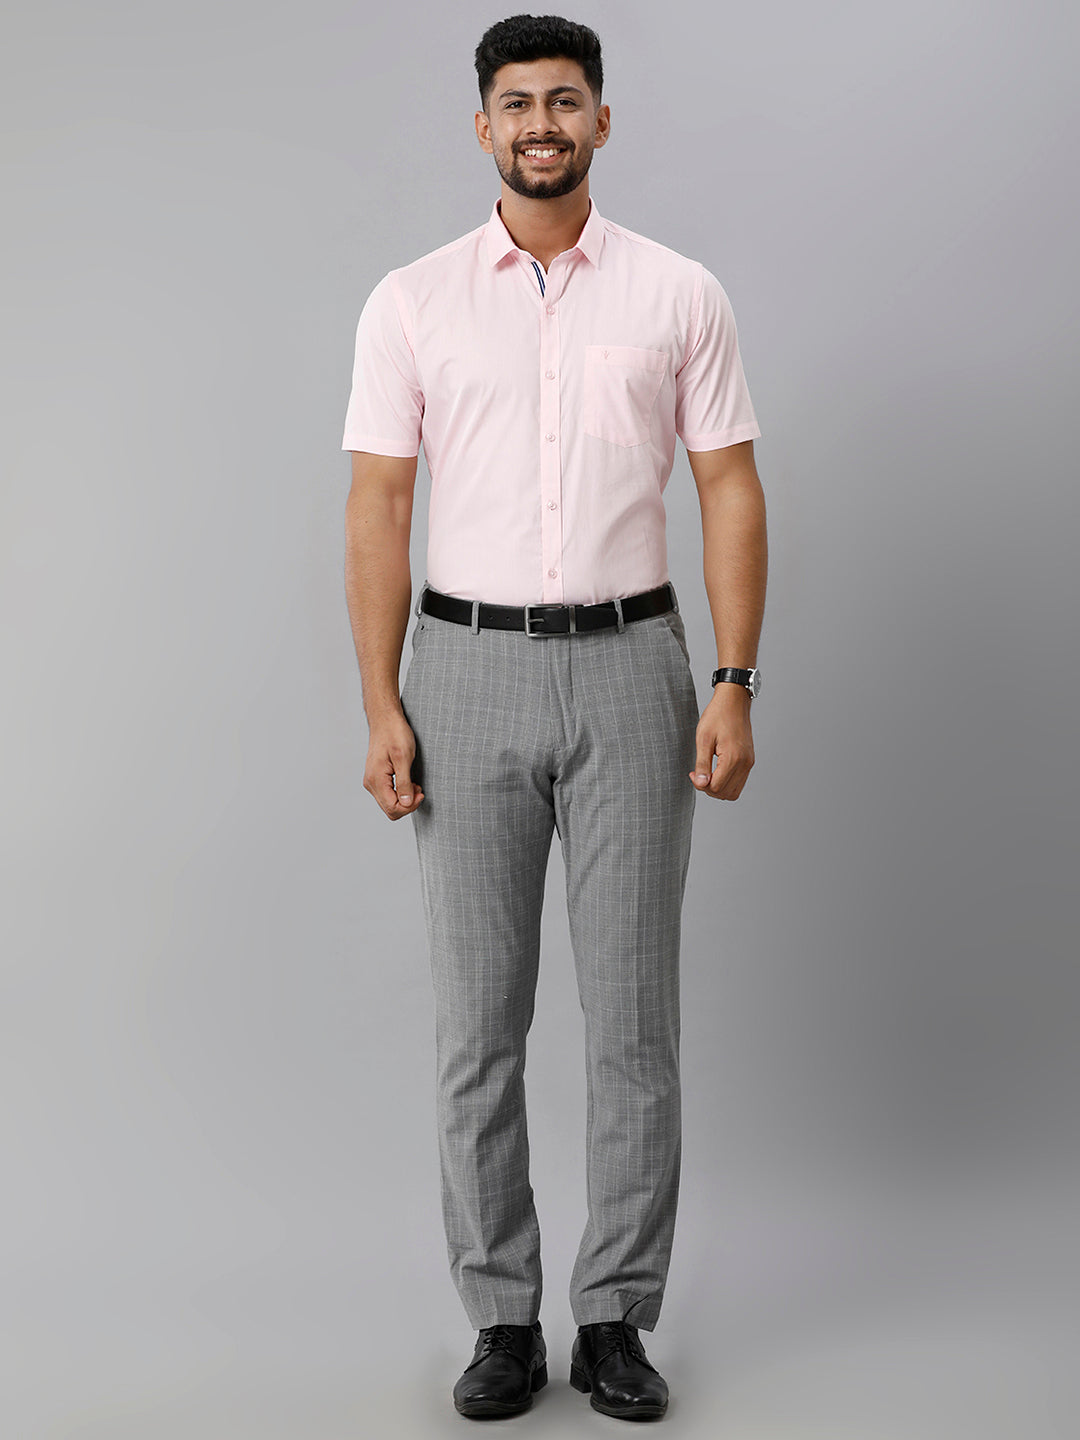 Mens Premium Cotton Formal Shirt Half Sleeves Light Pink MH G115-Full view